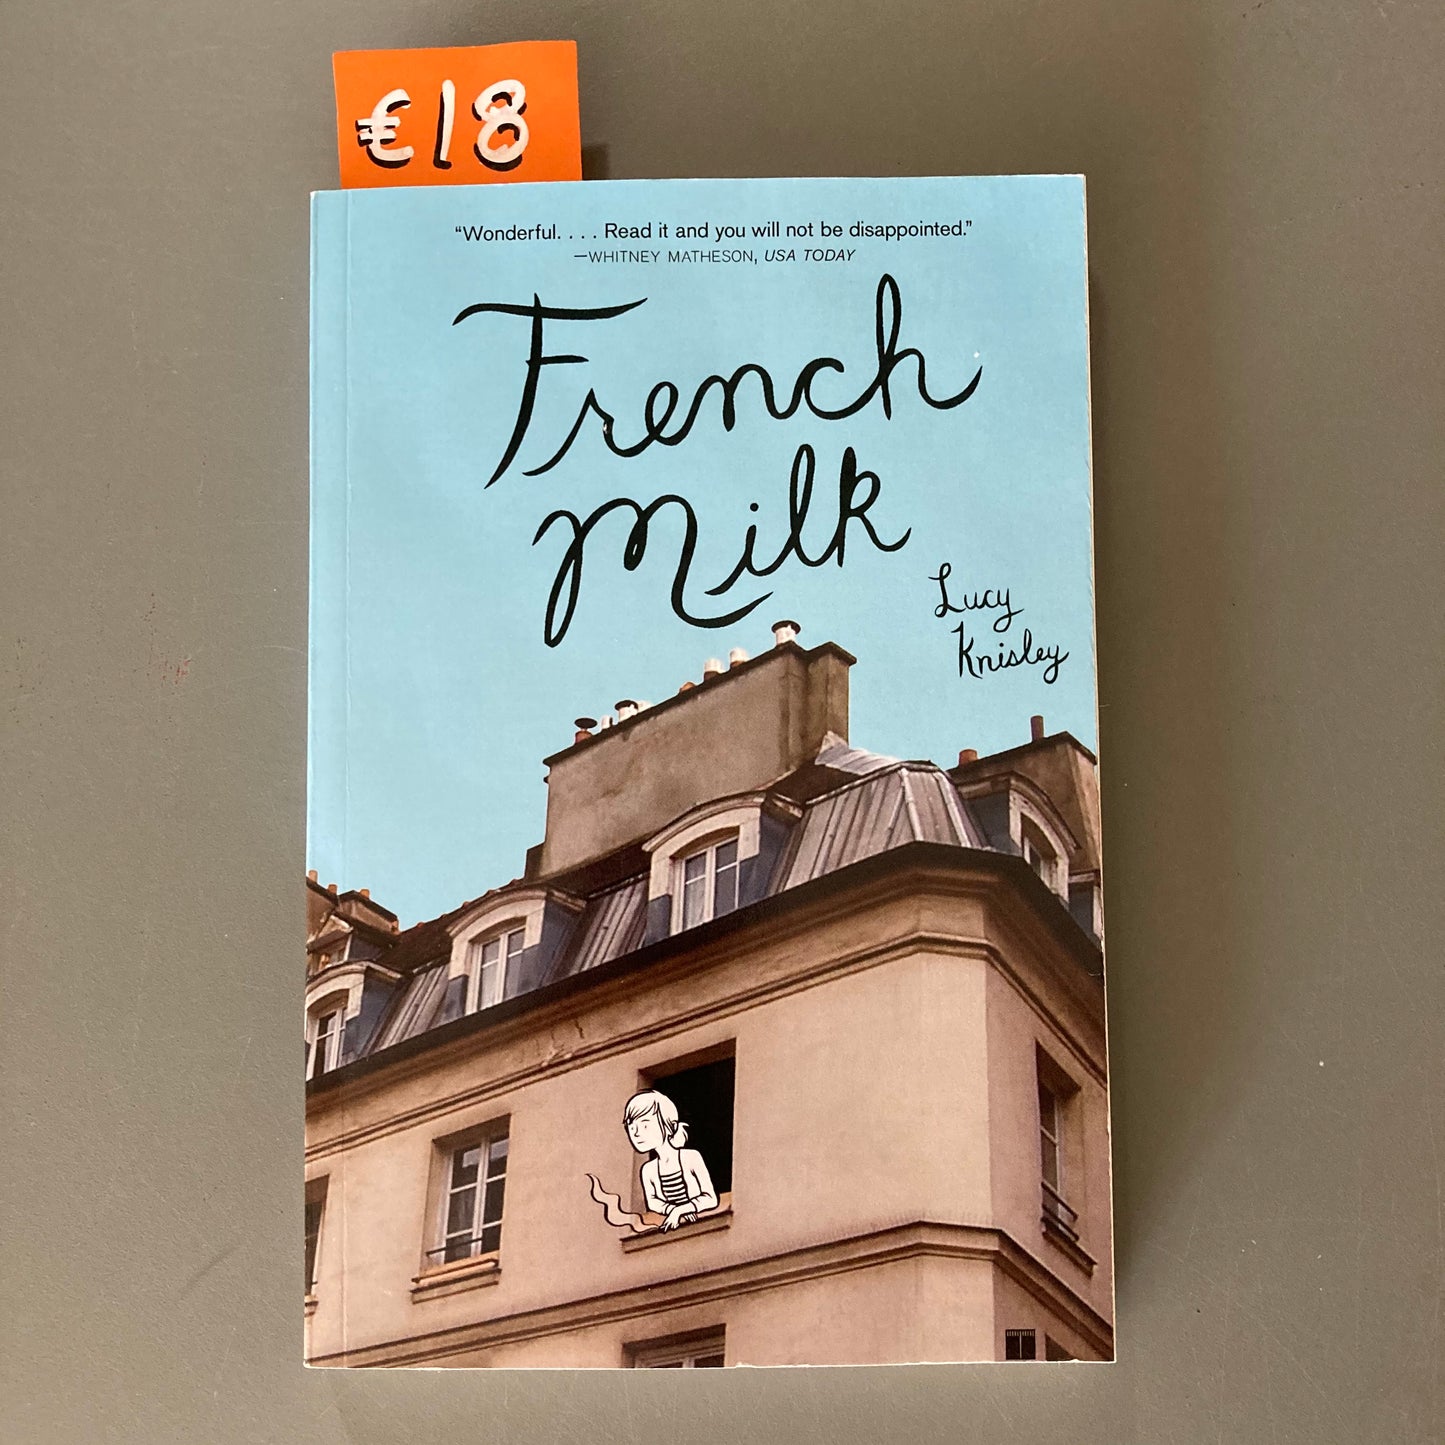 French Milk